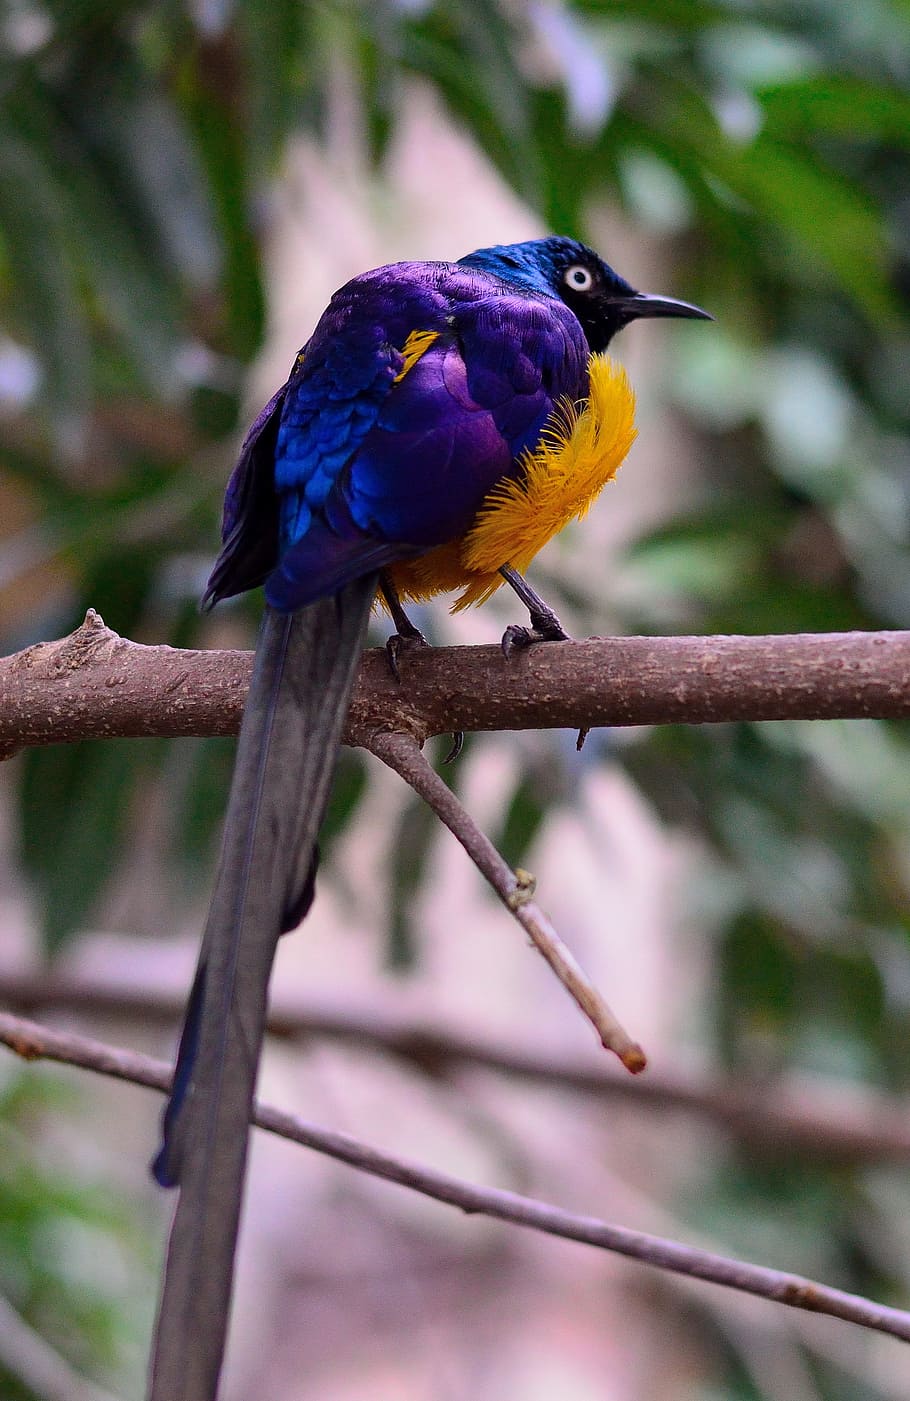 púrpura, amarillo, pájaro posado, árbol, estornino brillante, pájaro, mosca, alas, pluma, fauna silvestre